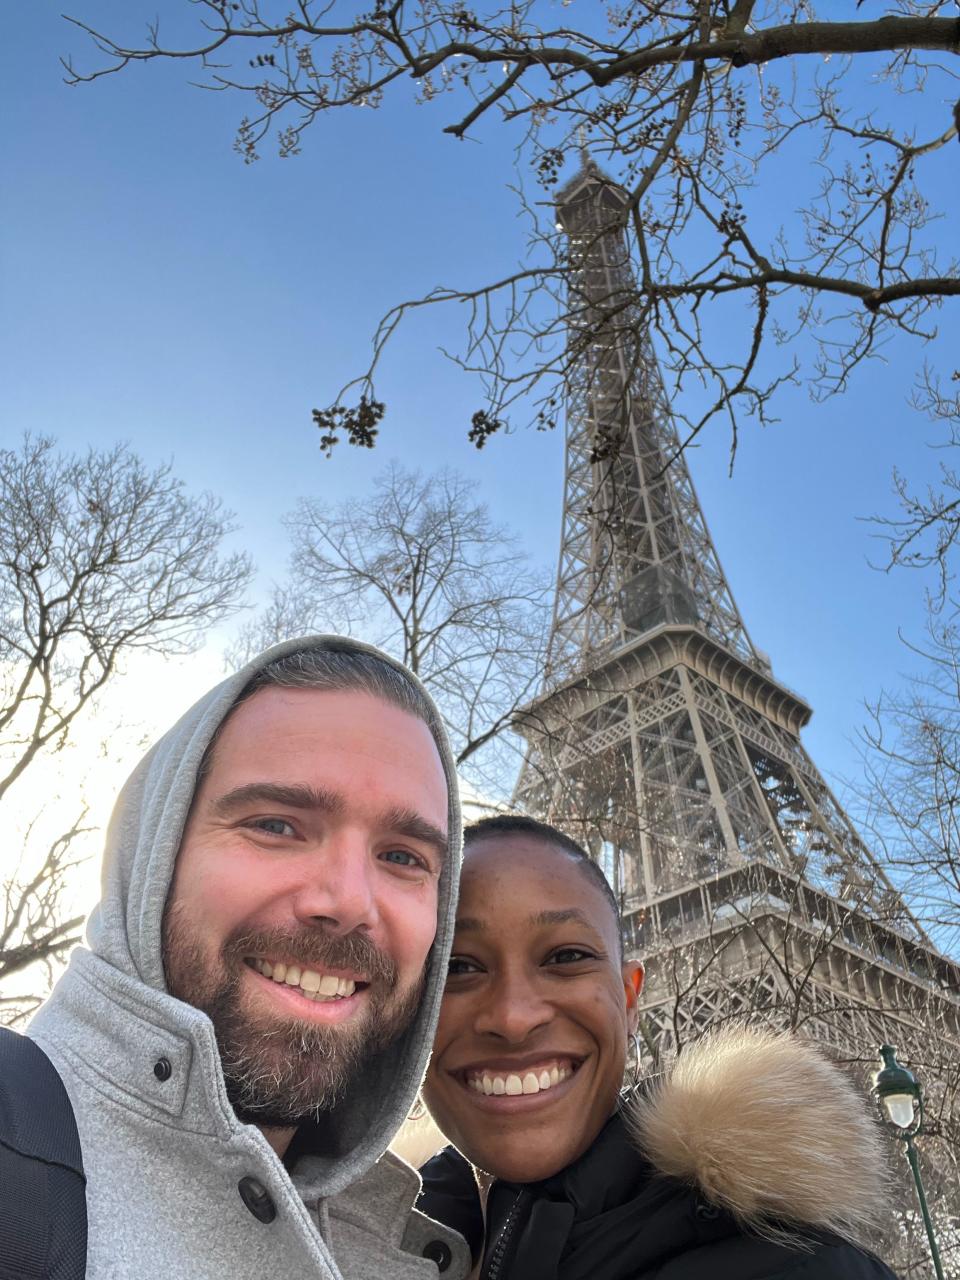 Gabriel Solberg and Krystina Burton by the Eiffel Tower in Paris.